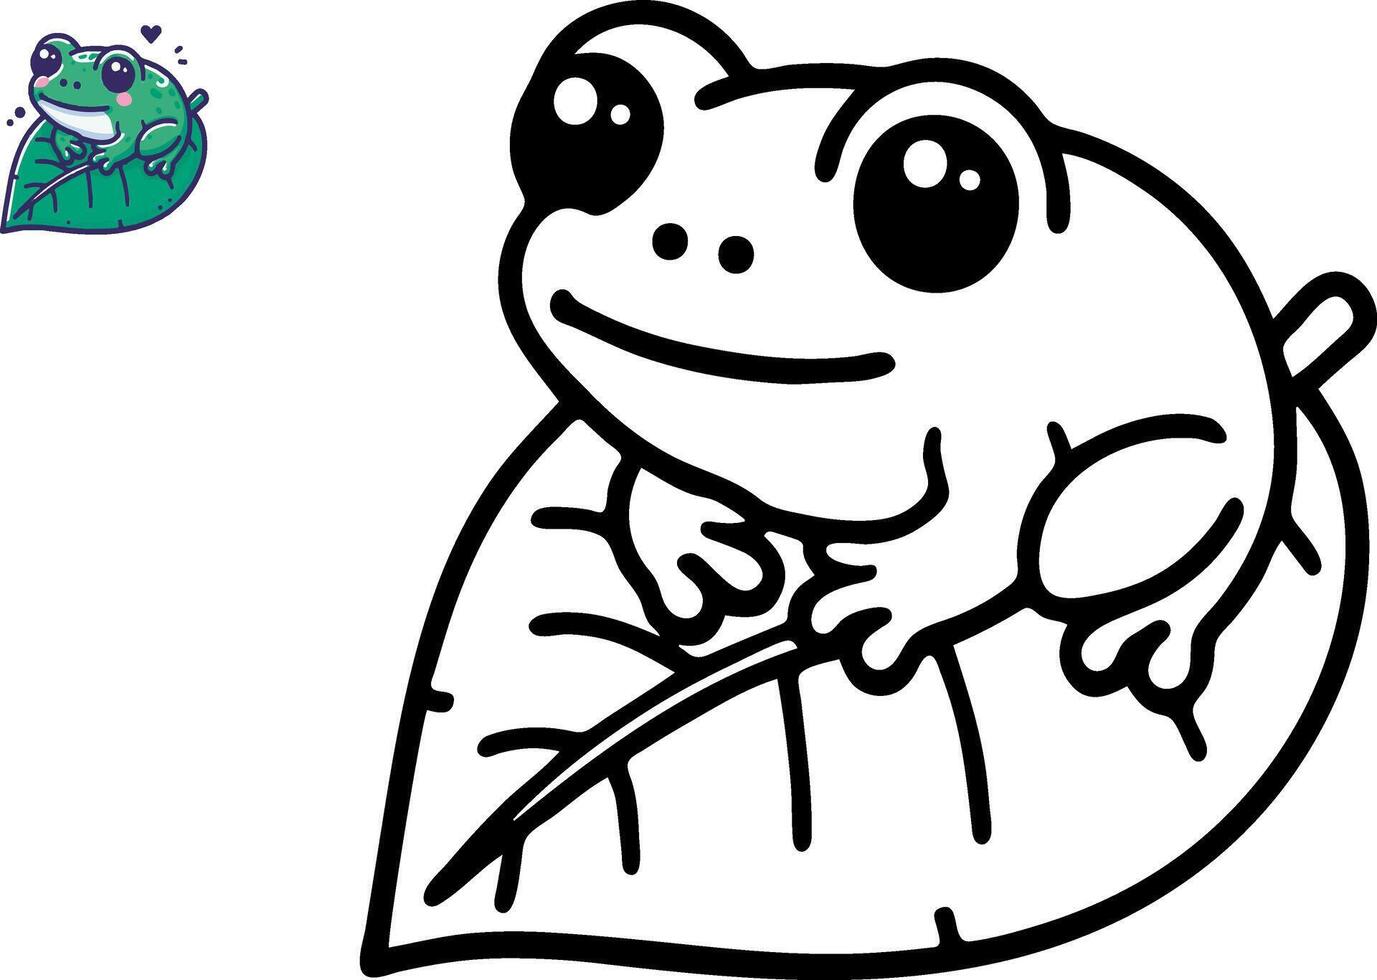 Illustration of Cartoon frog, Coloring book vector